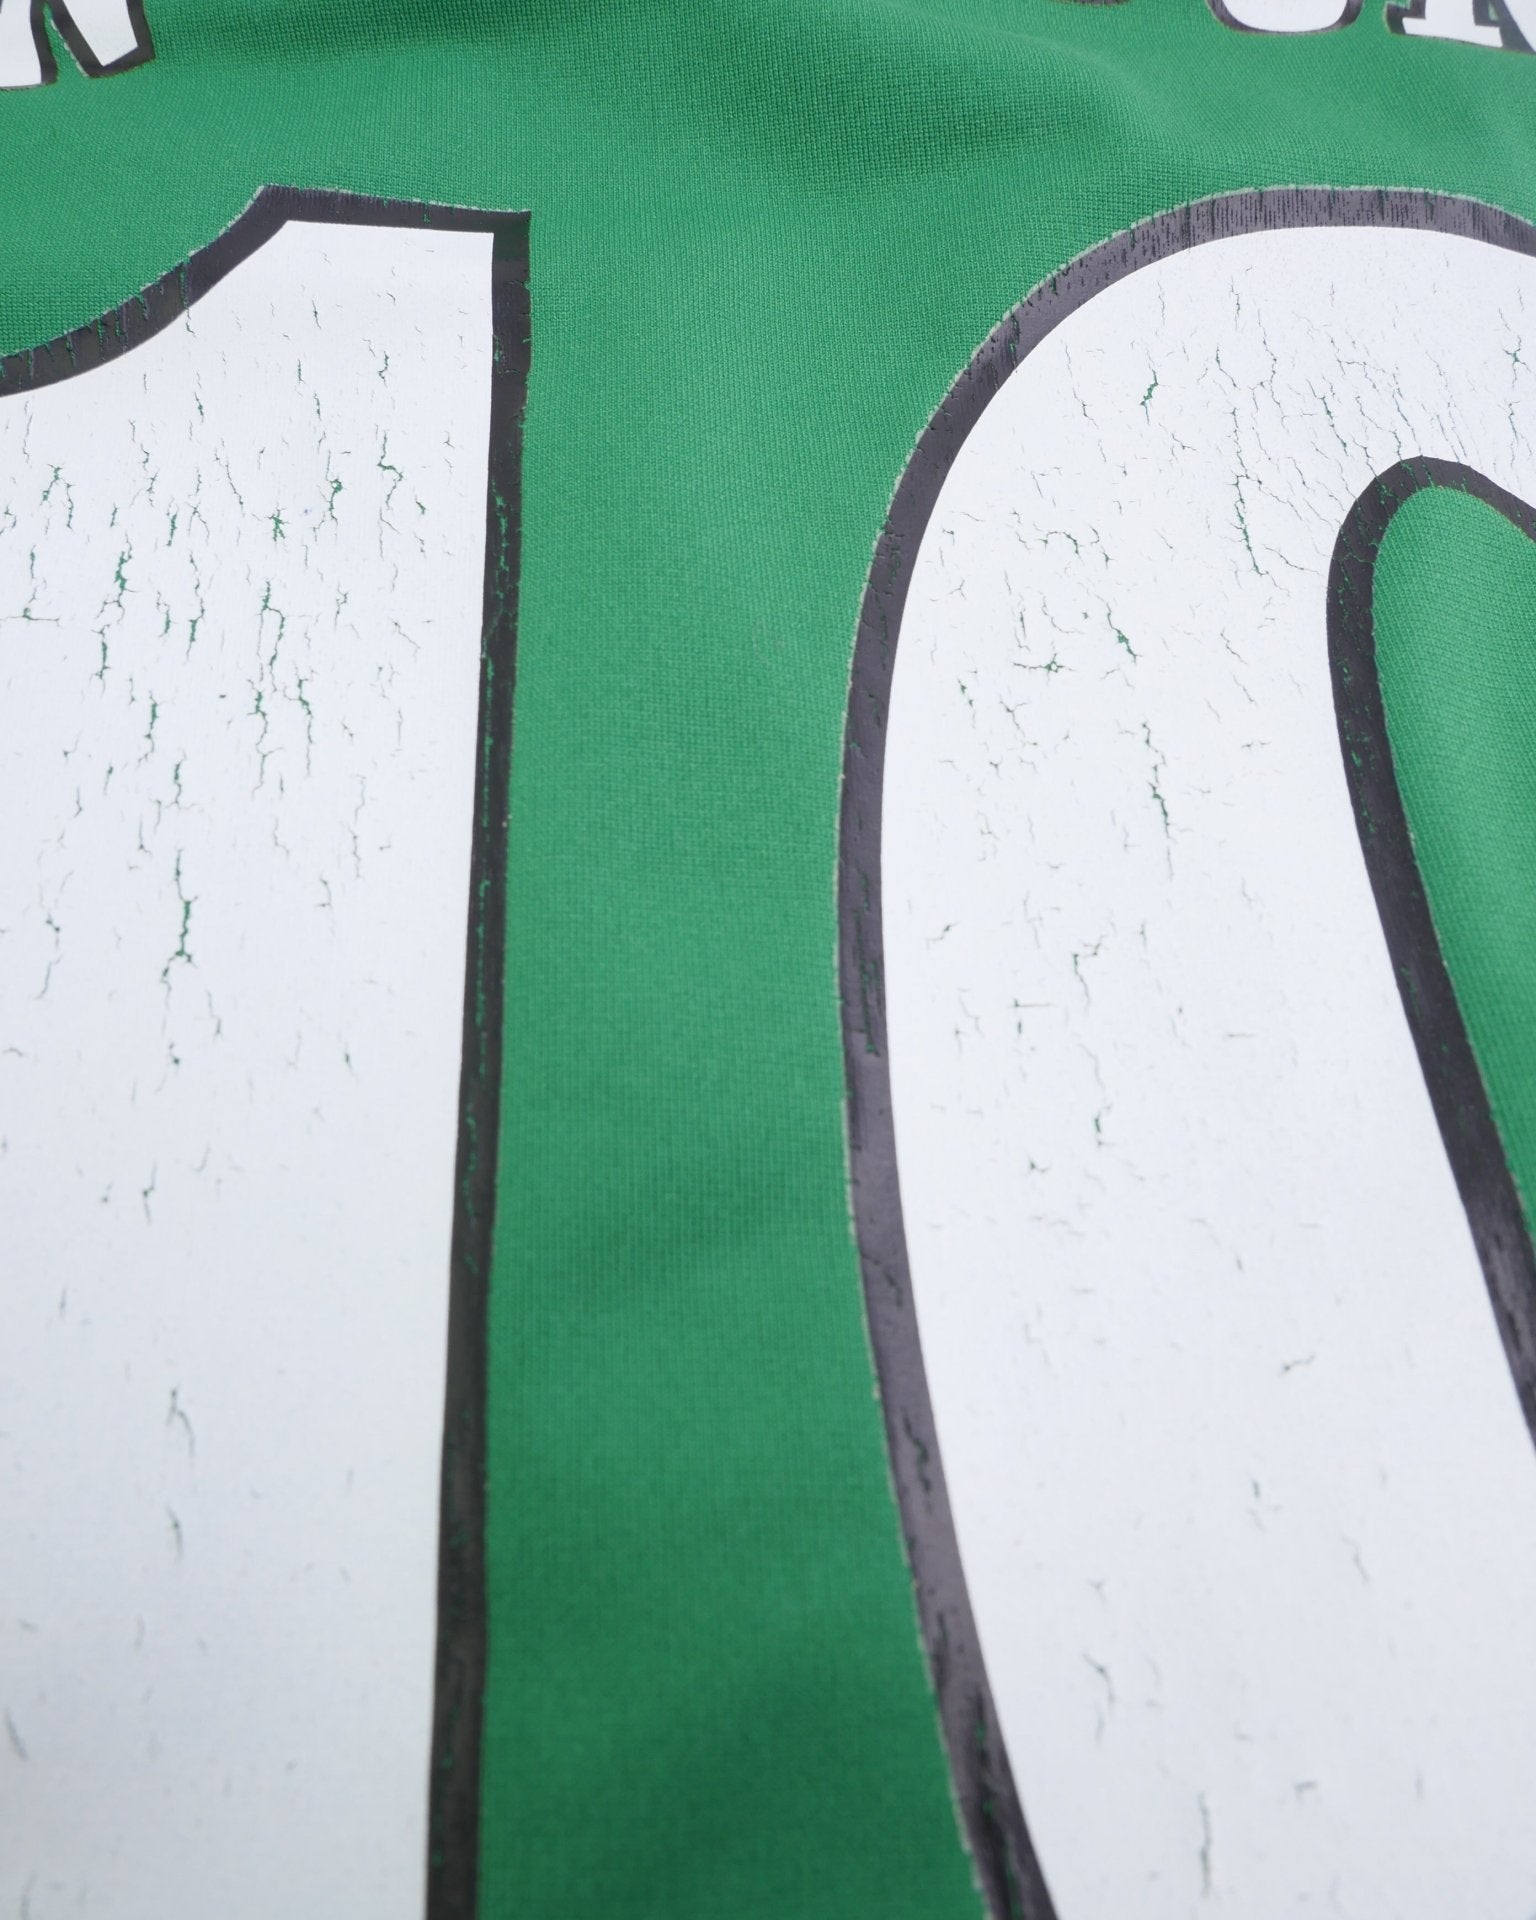 nike embroidered Logo 'Wolfsburg' Bundesliga Soccer Jersey Shirt - Peeces